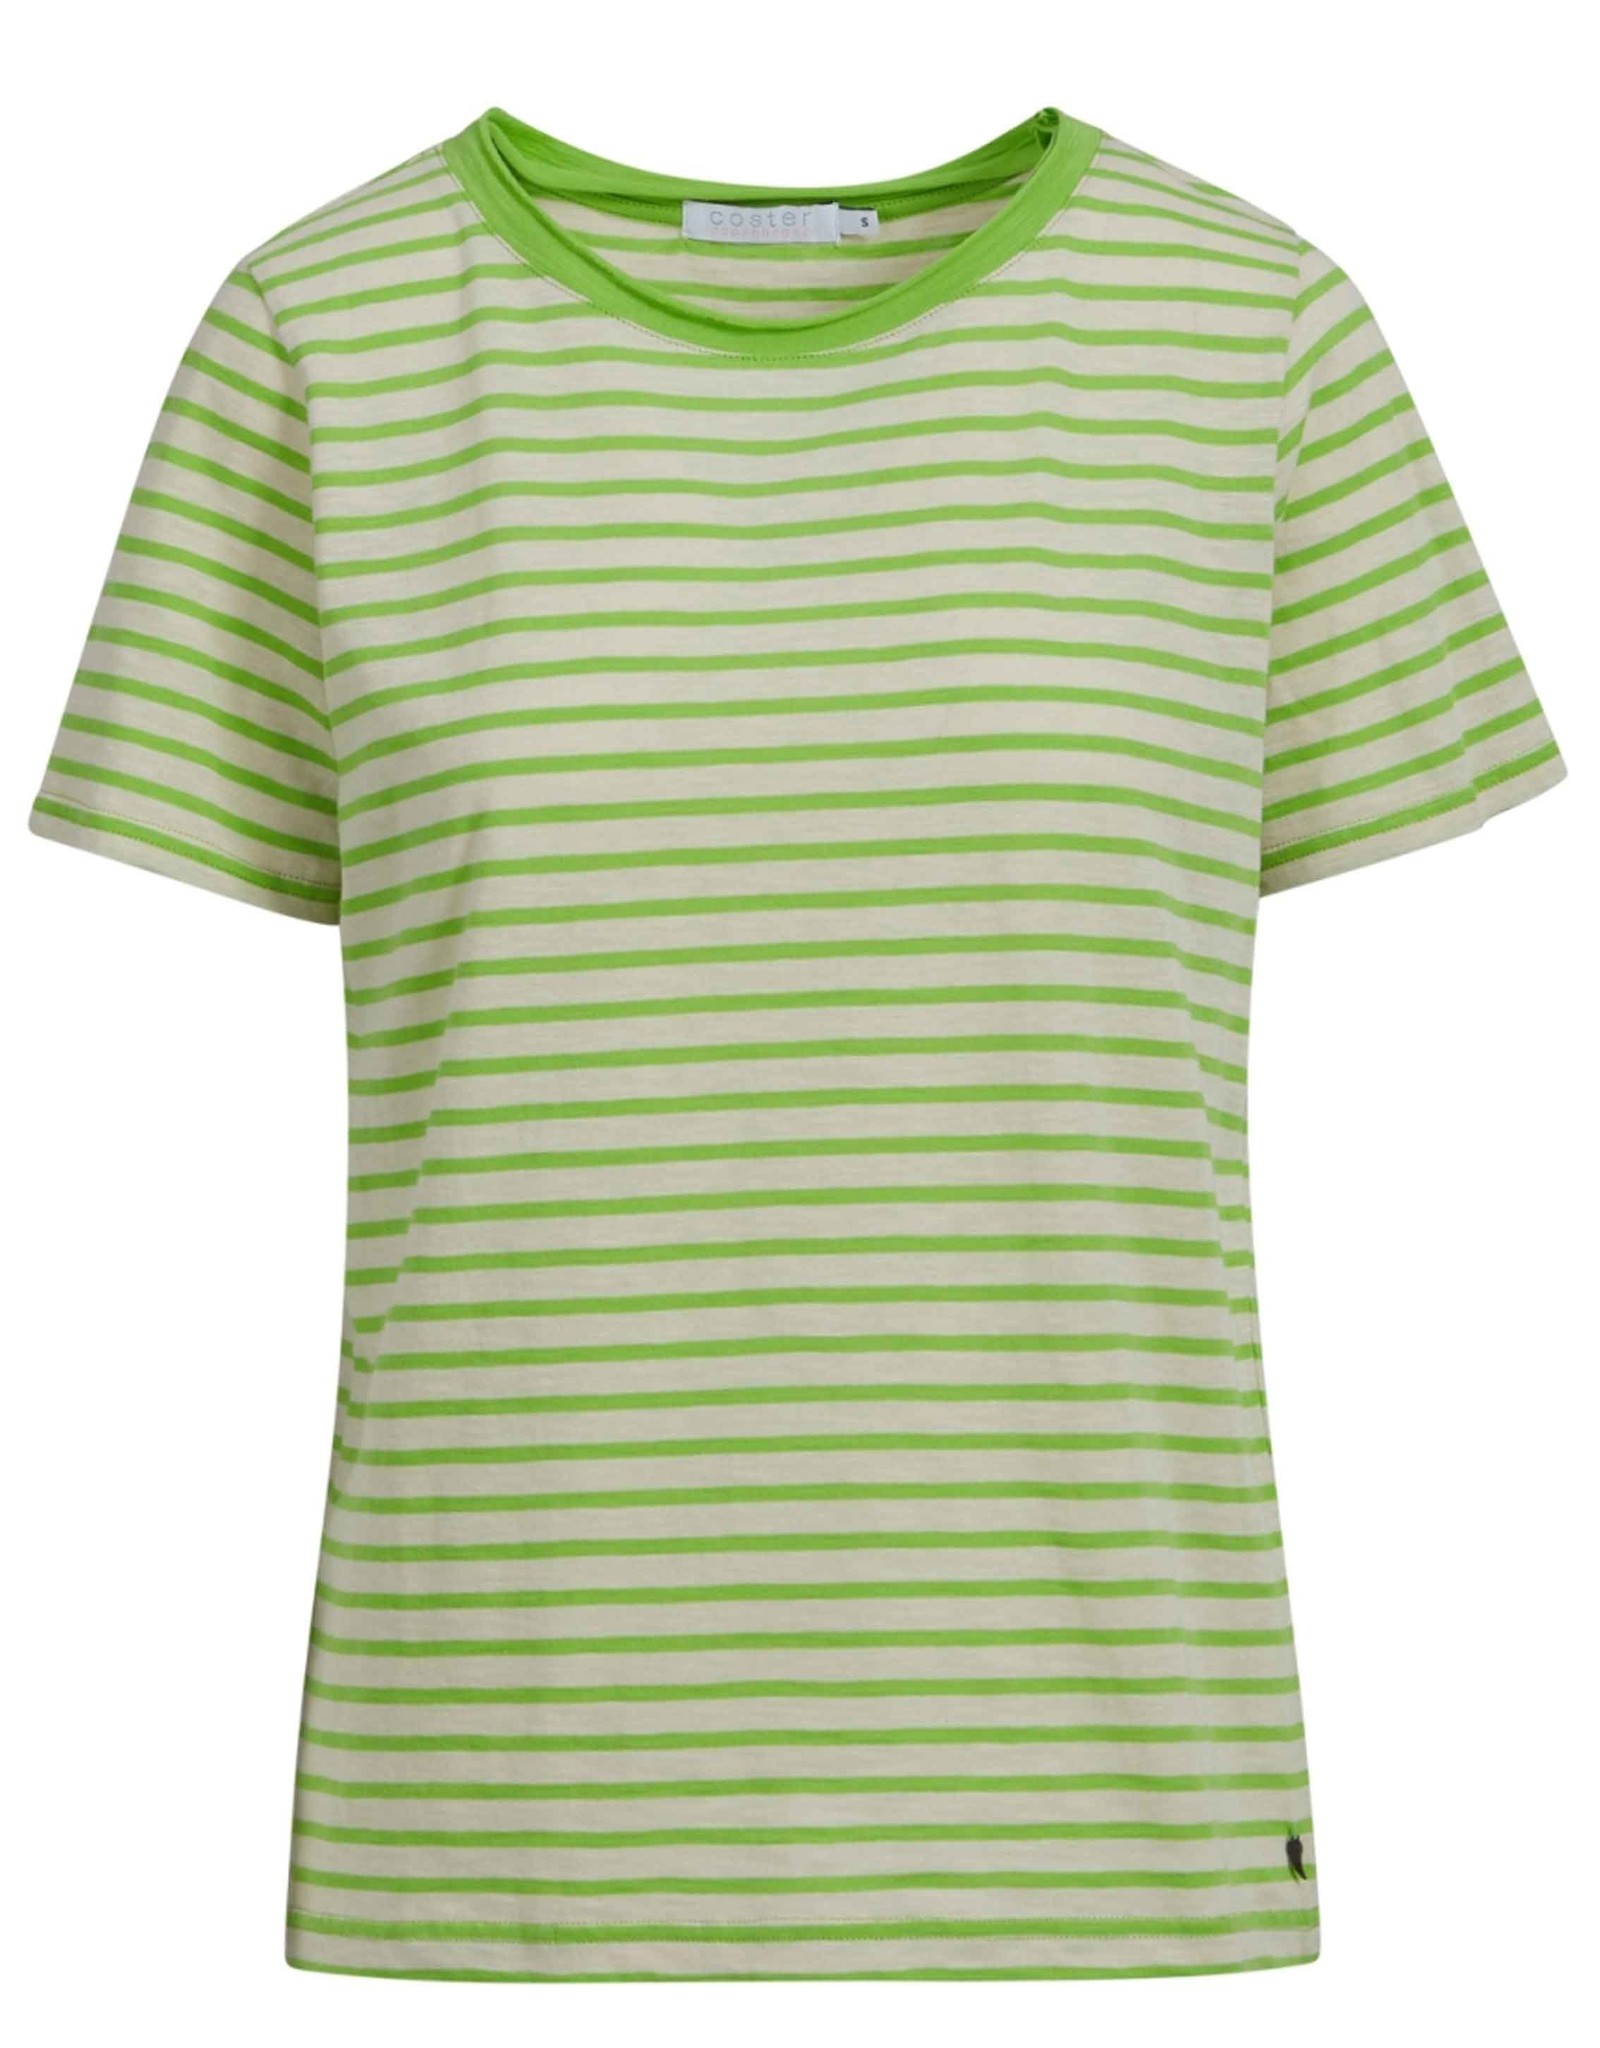 Coster Copenhagen T-shirt Stripe Flashgreen